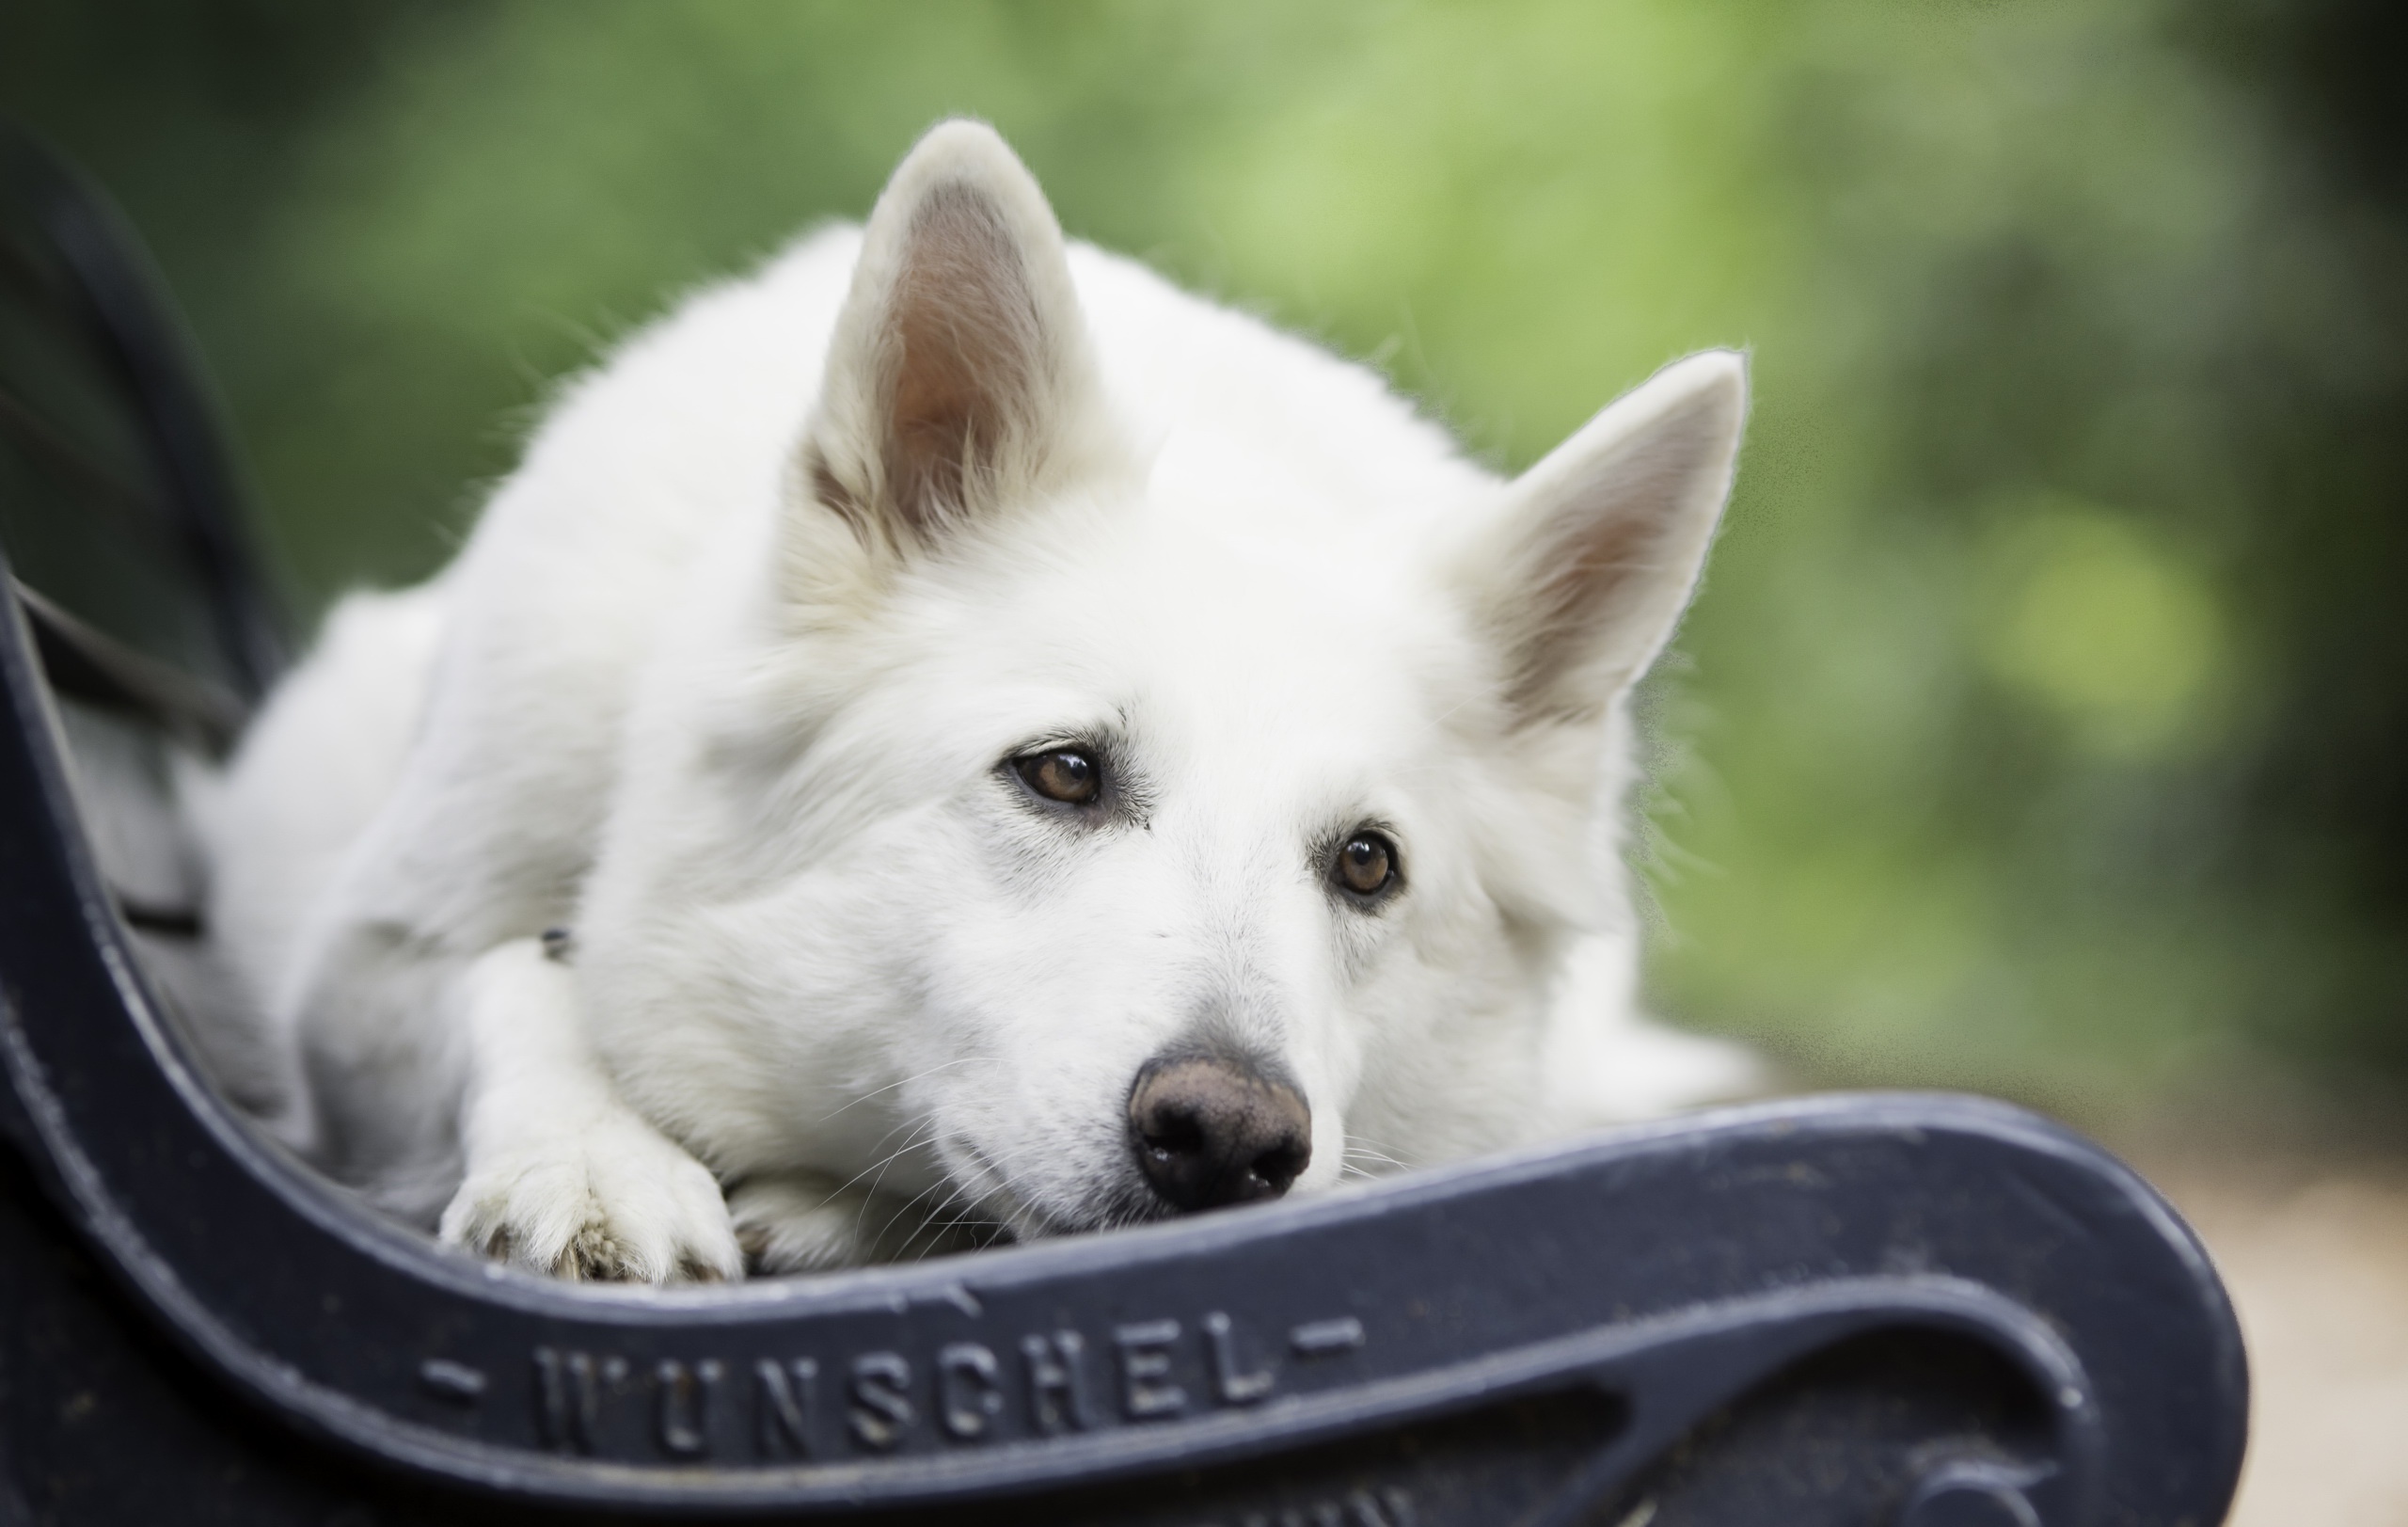 Bench Depth Of Field Dog Pet Resting White Shepherd 2560x1623